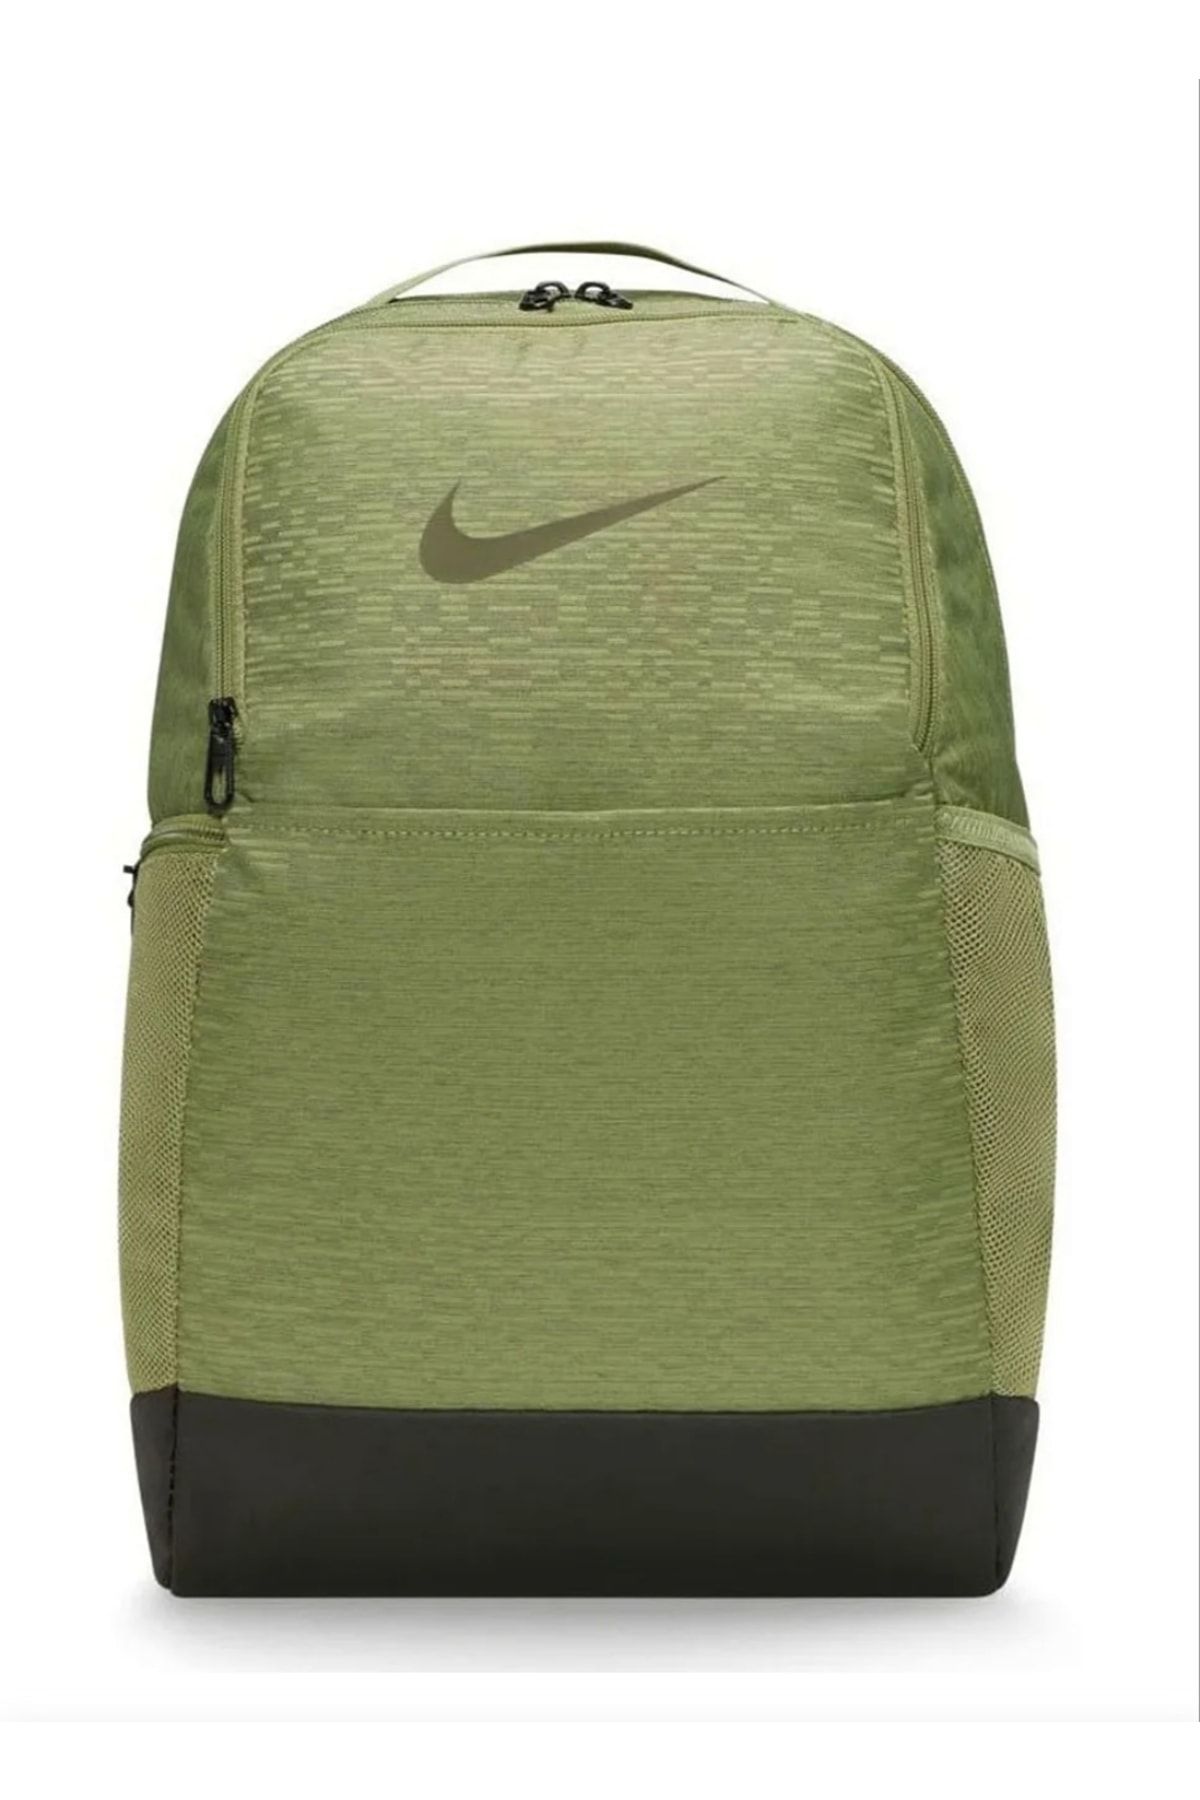 Nike کوله پشتی Brasilia (خاکی-گرین)